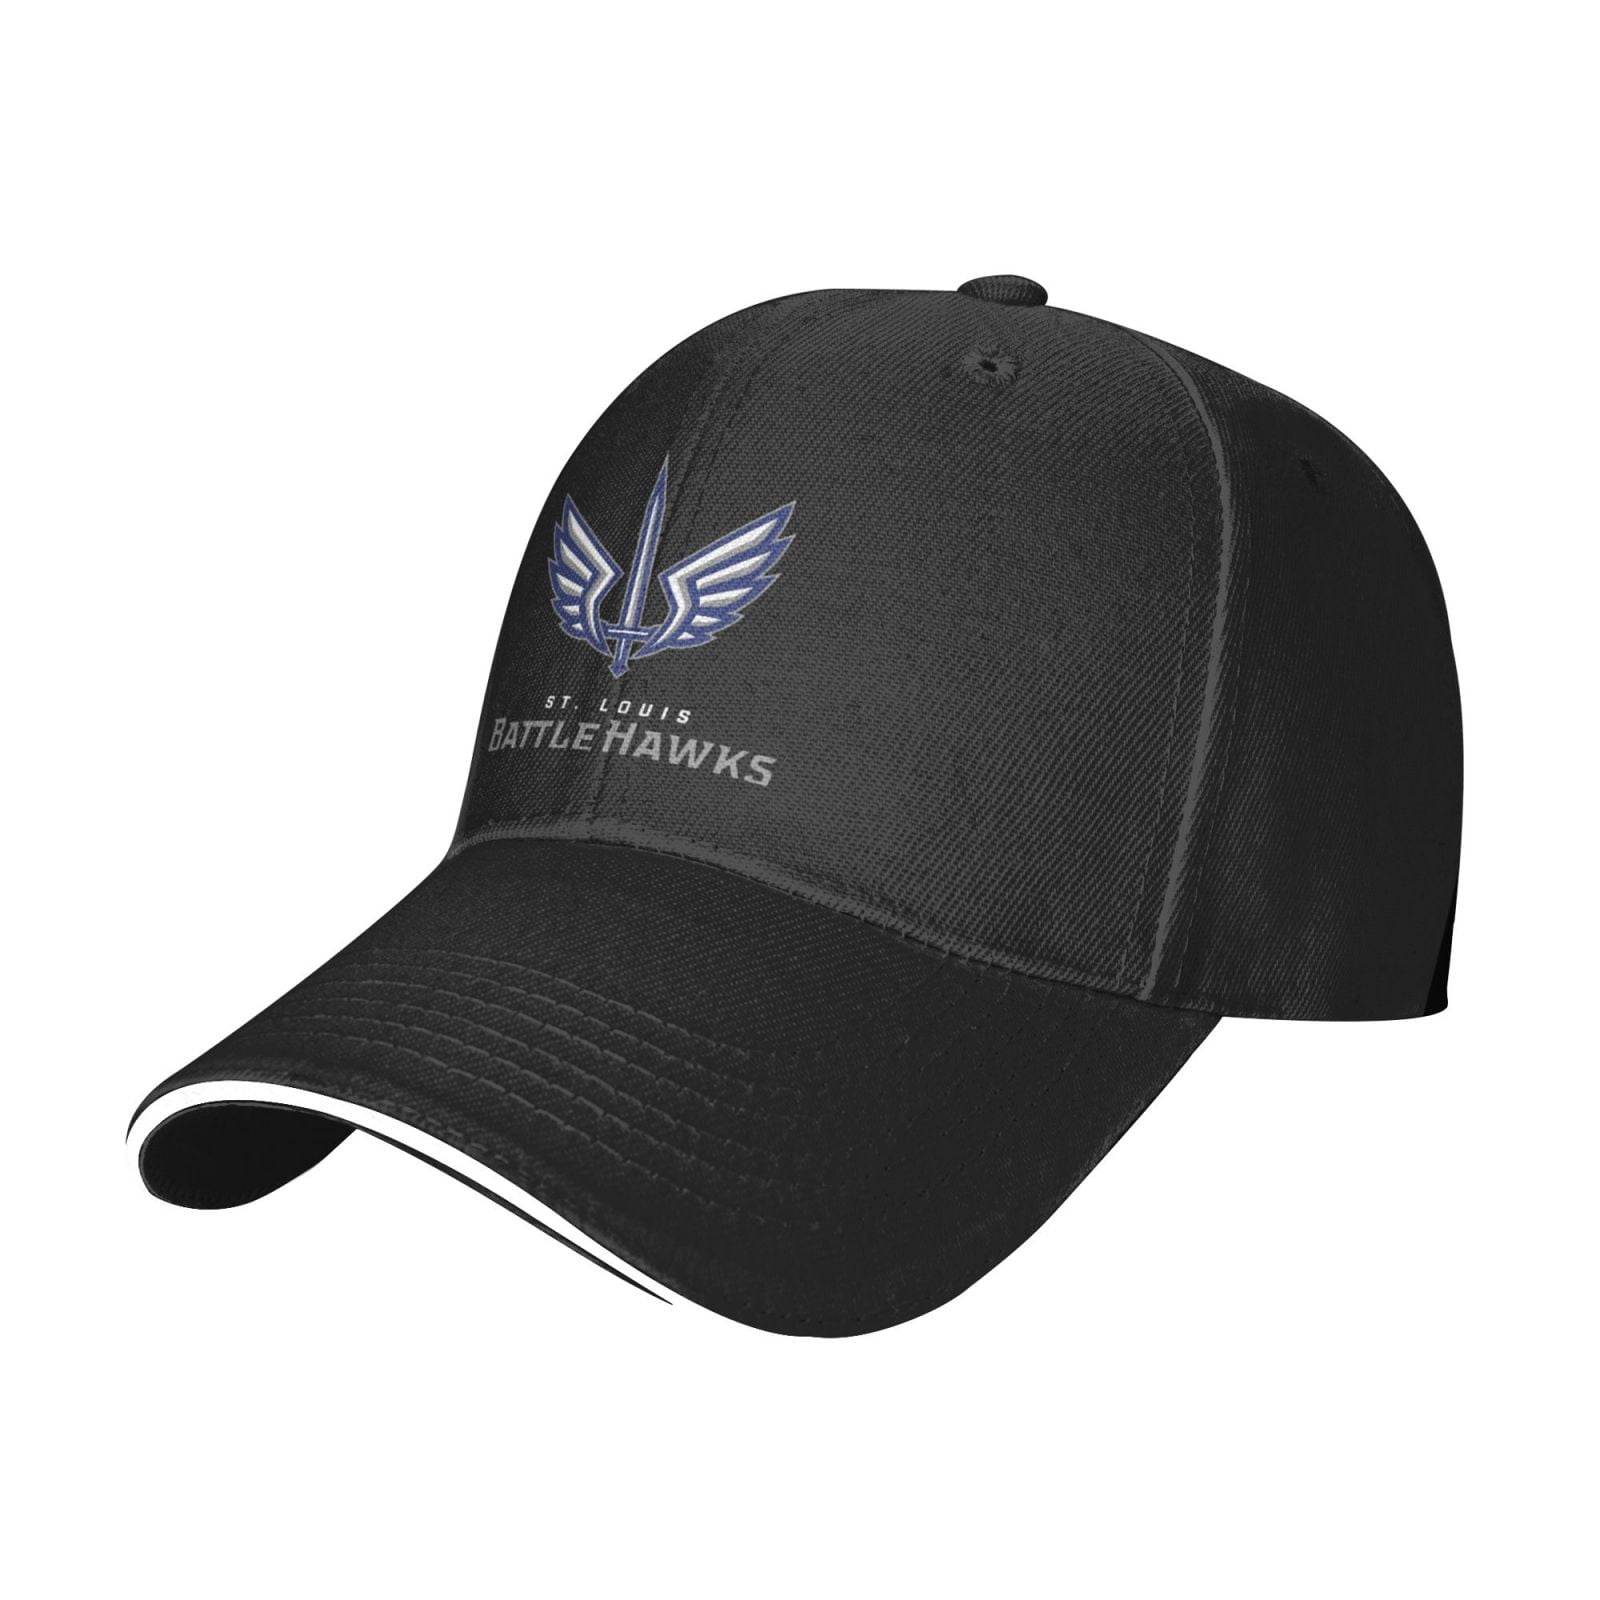 New St. Louis BattleHawks Adjustable Hat Unisex Cowboy Hat Baseball Cap ...